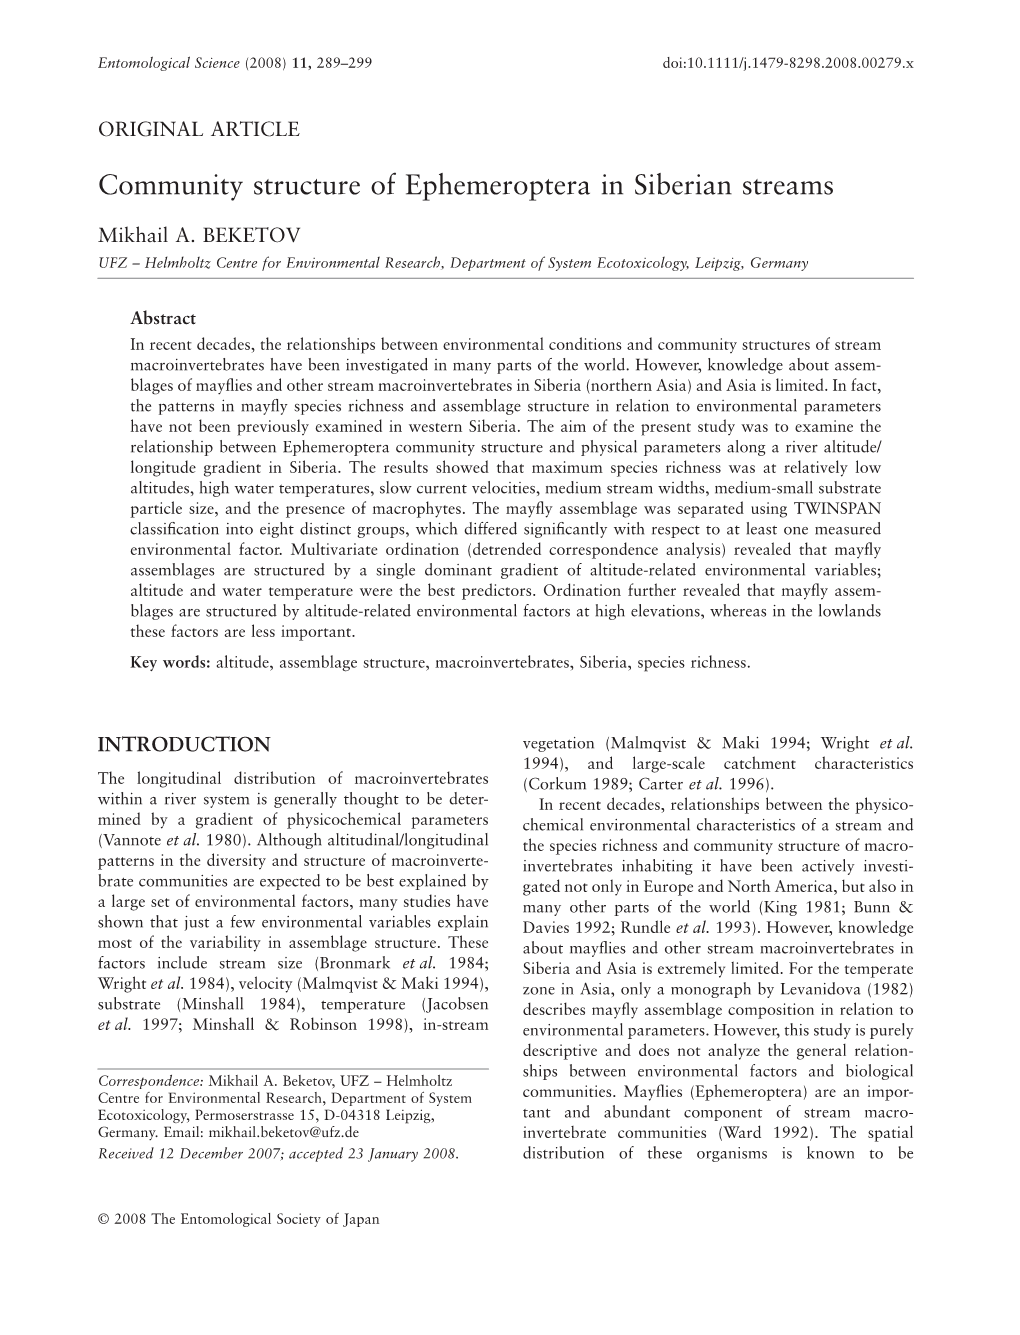 Community Structure of Ephemeroptera in Siberian Streams